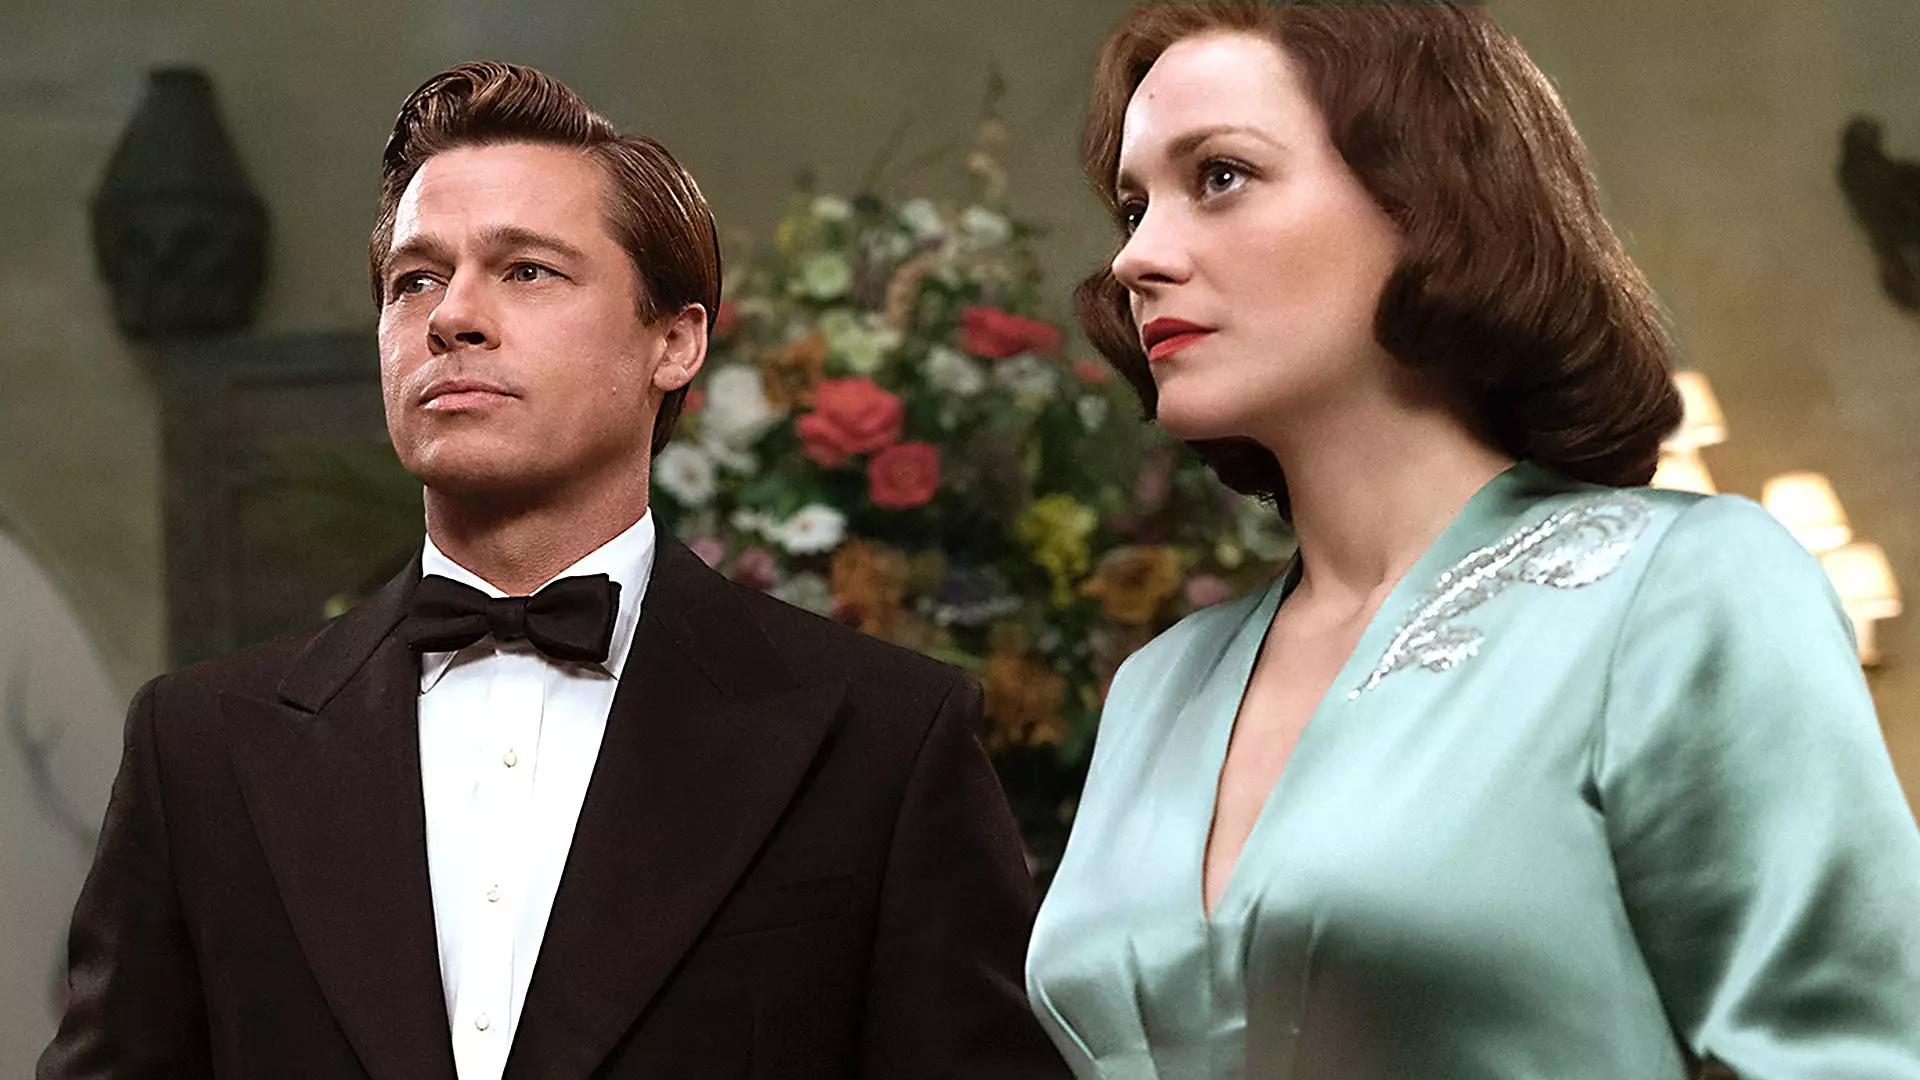 Brad Pitt Has Shocking Love Affair With Marion Cotillard In New Film